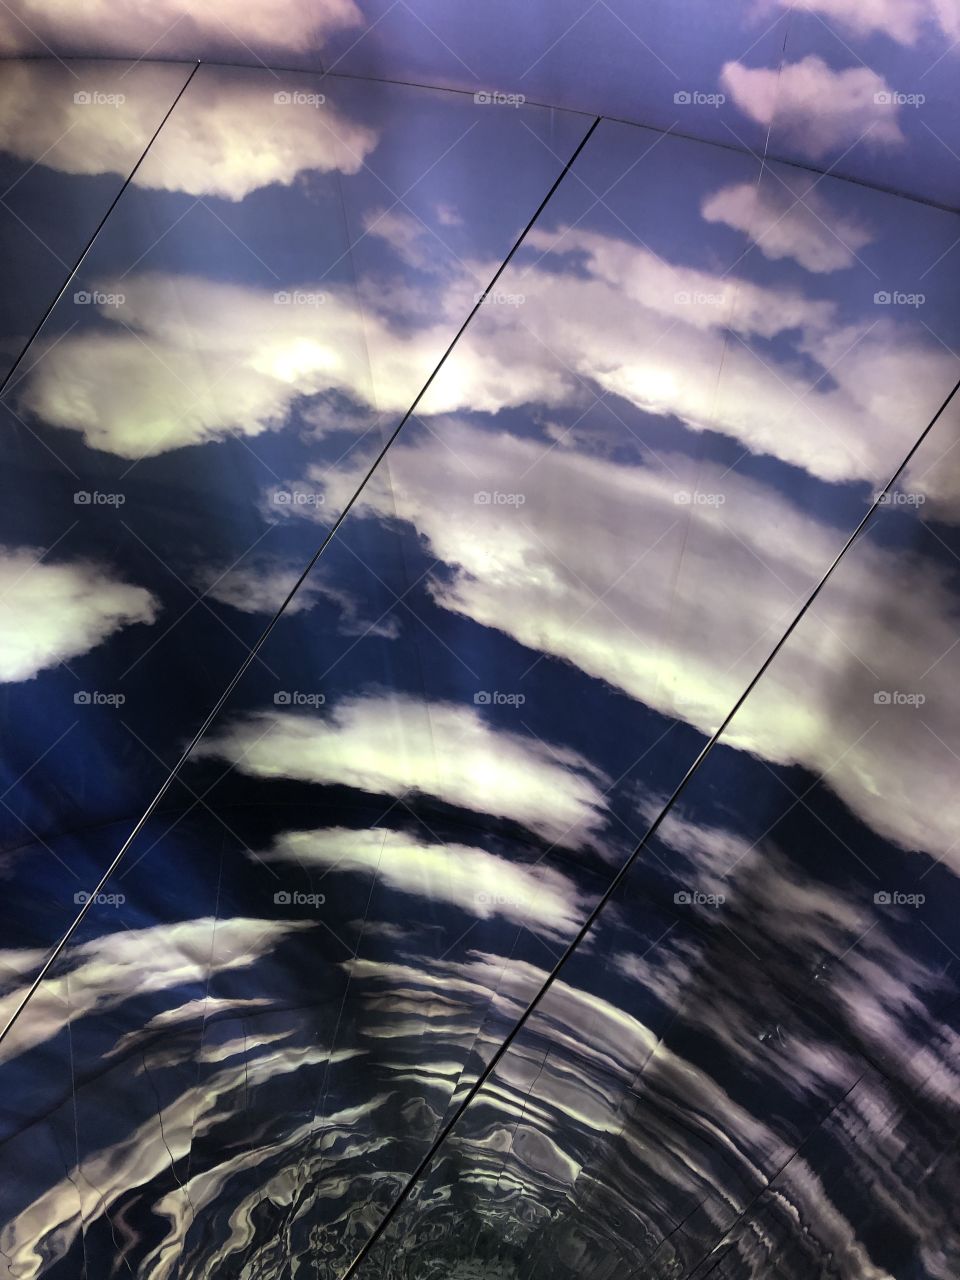 Mirrored clouds in art museum. Very trippy looking.